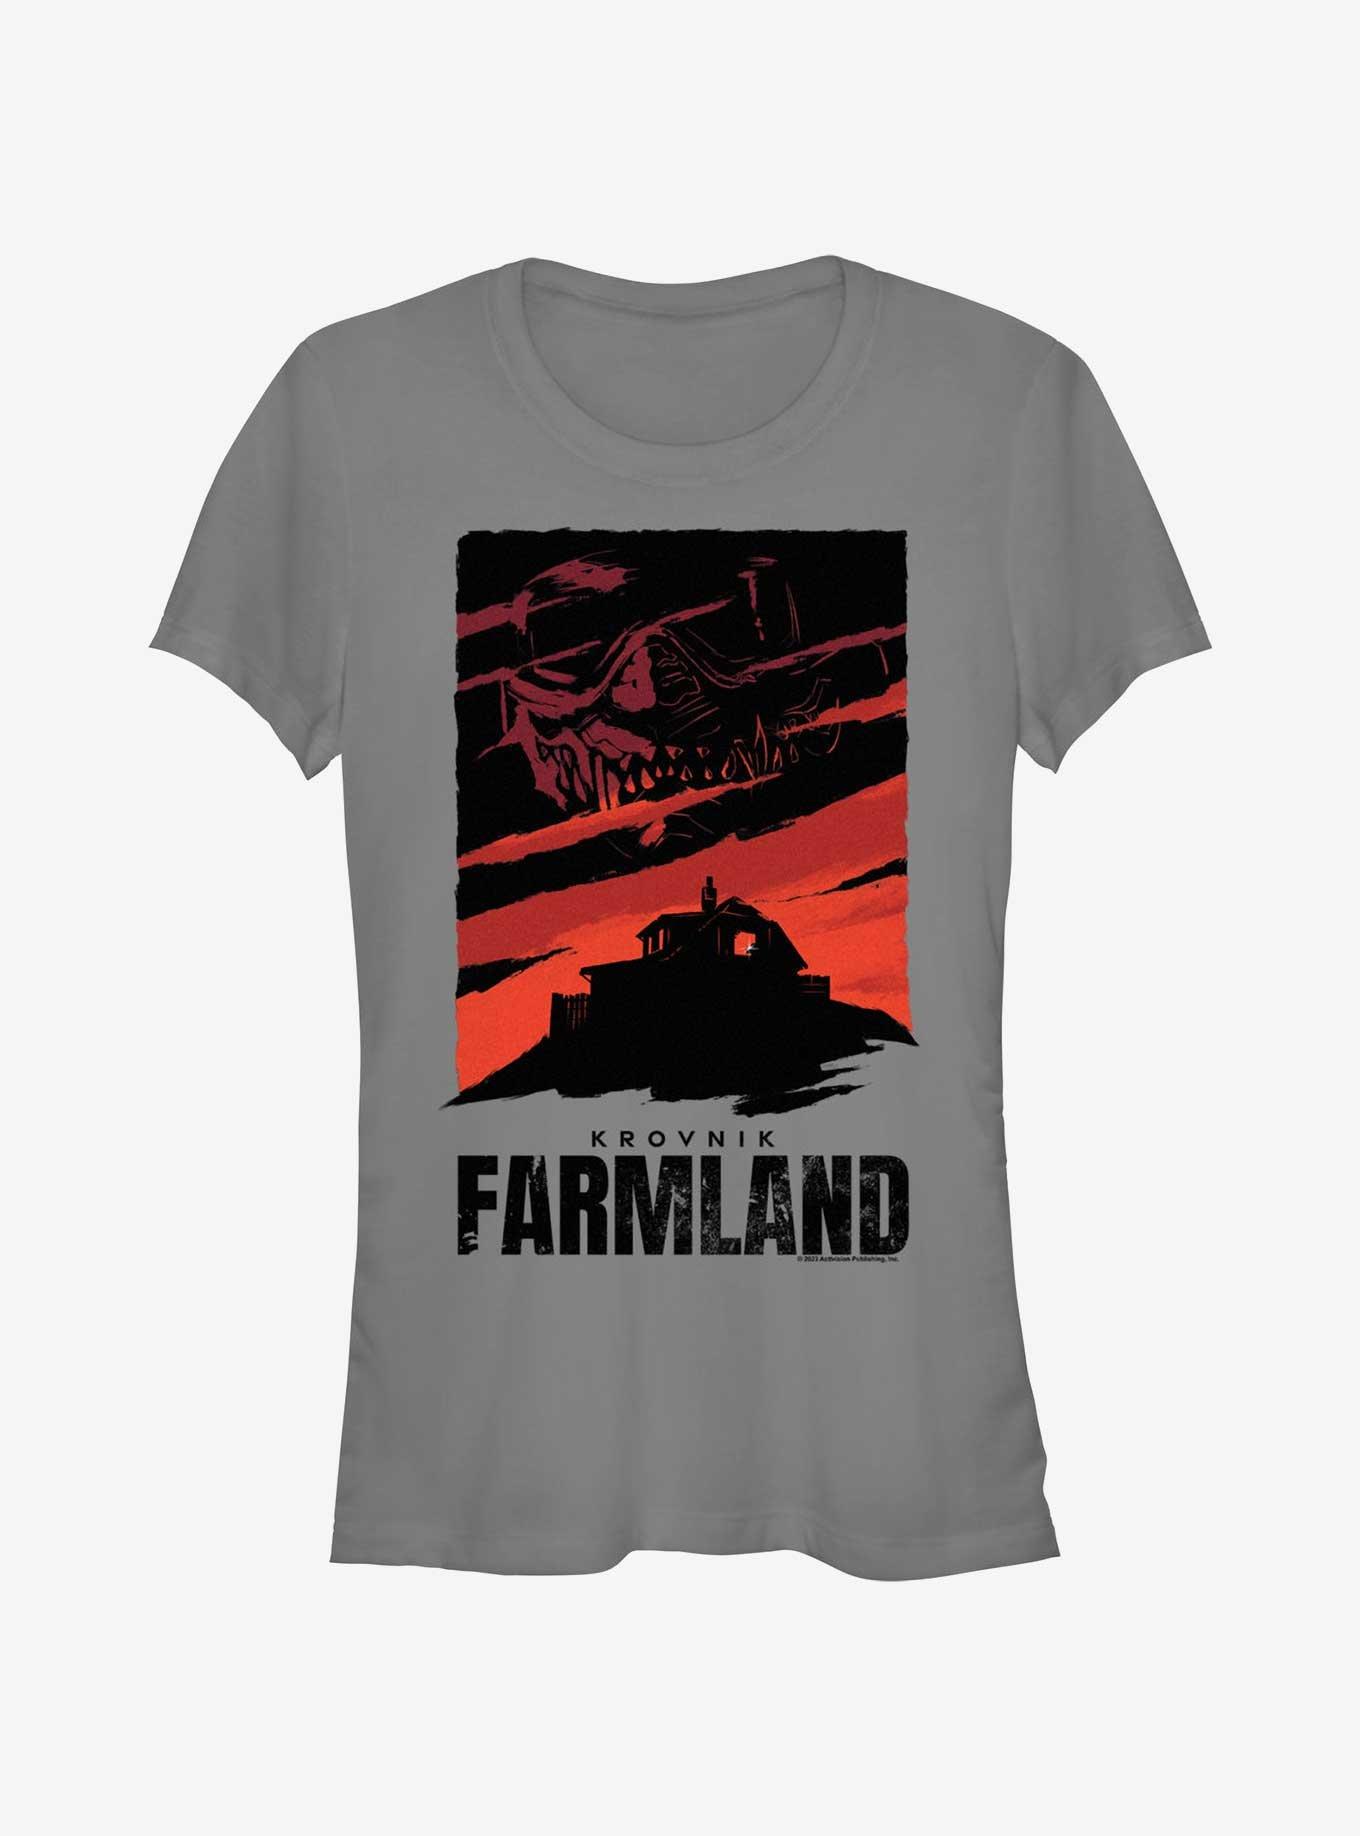 Call of Duty: Warzone Krovnik Farmland Poster Girls T-Shirt